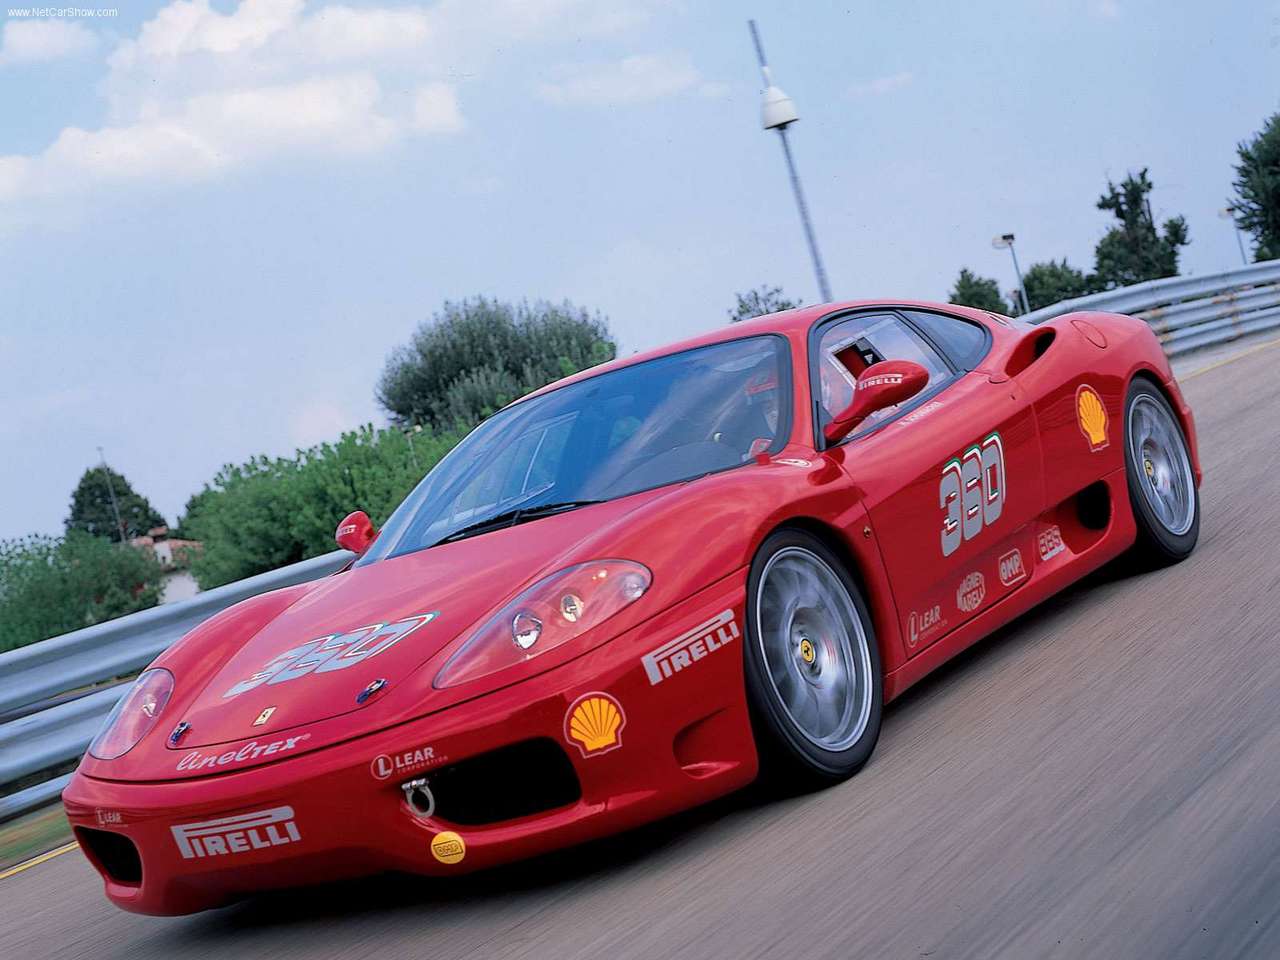 Ferrari - Populaire francais d'automobiles: 2001 Ferrari 360 Modena ...